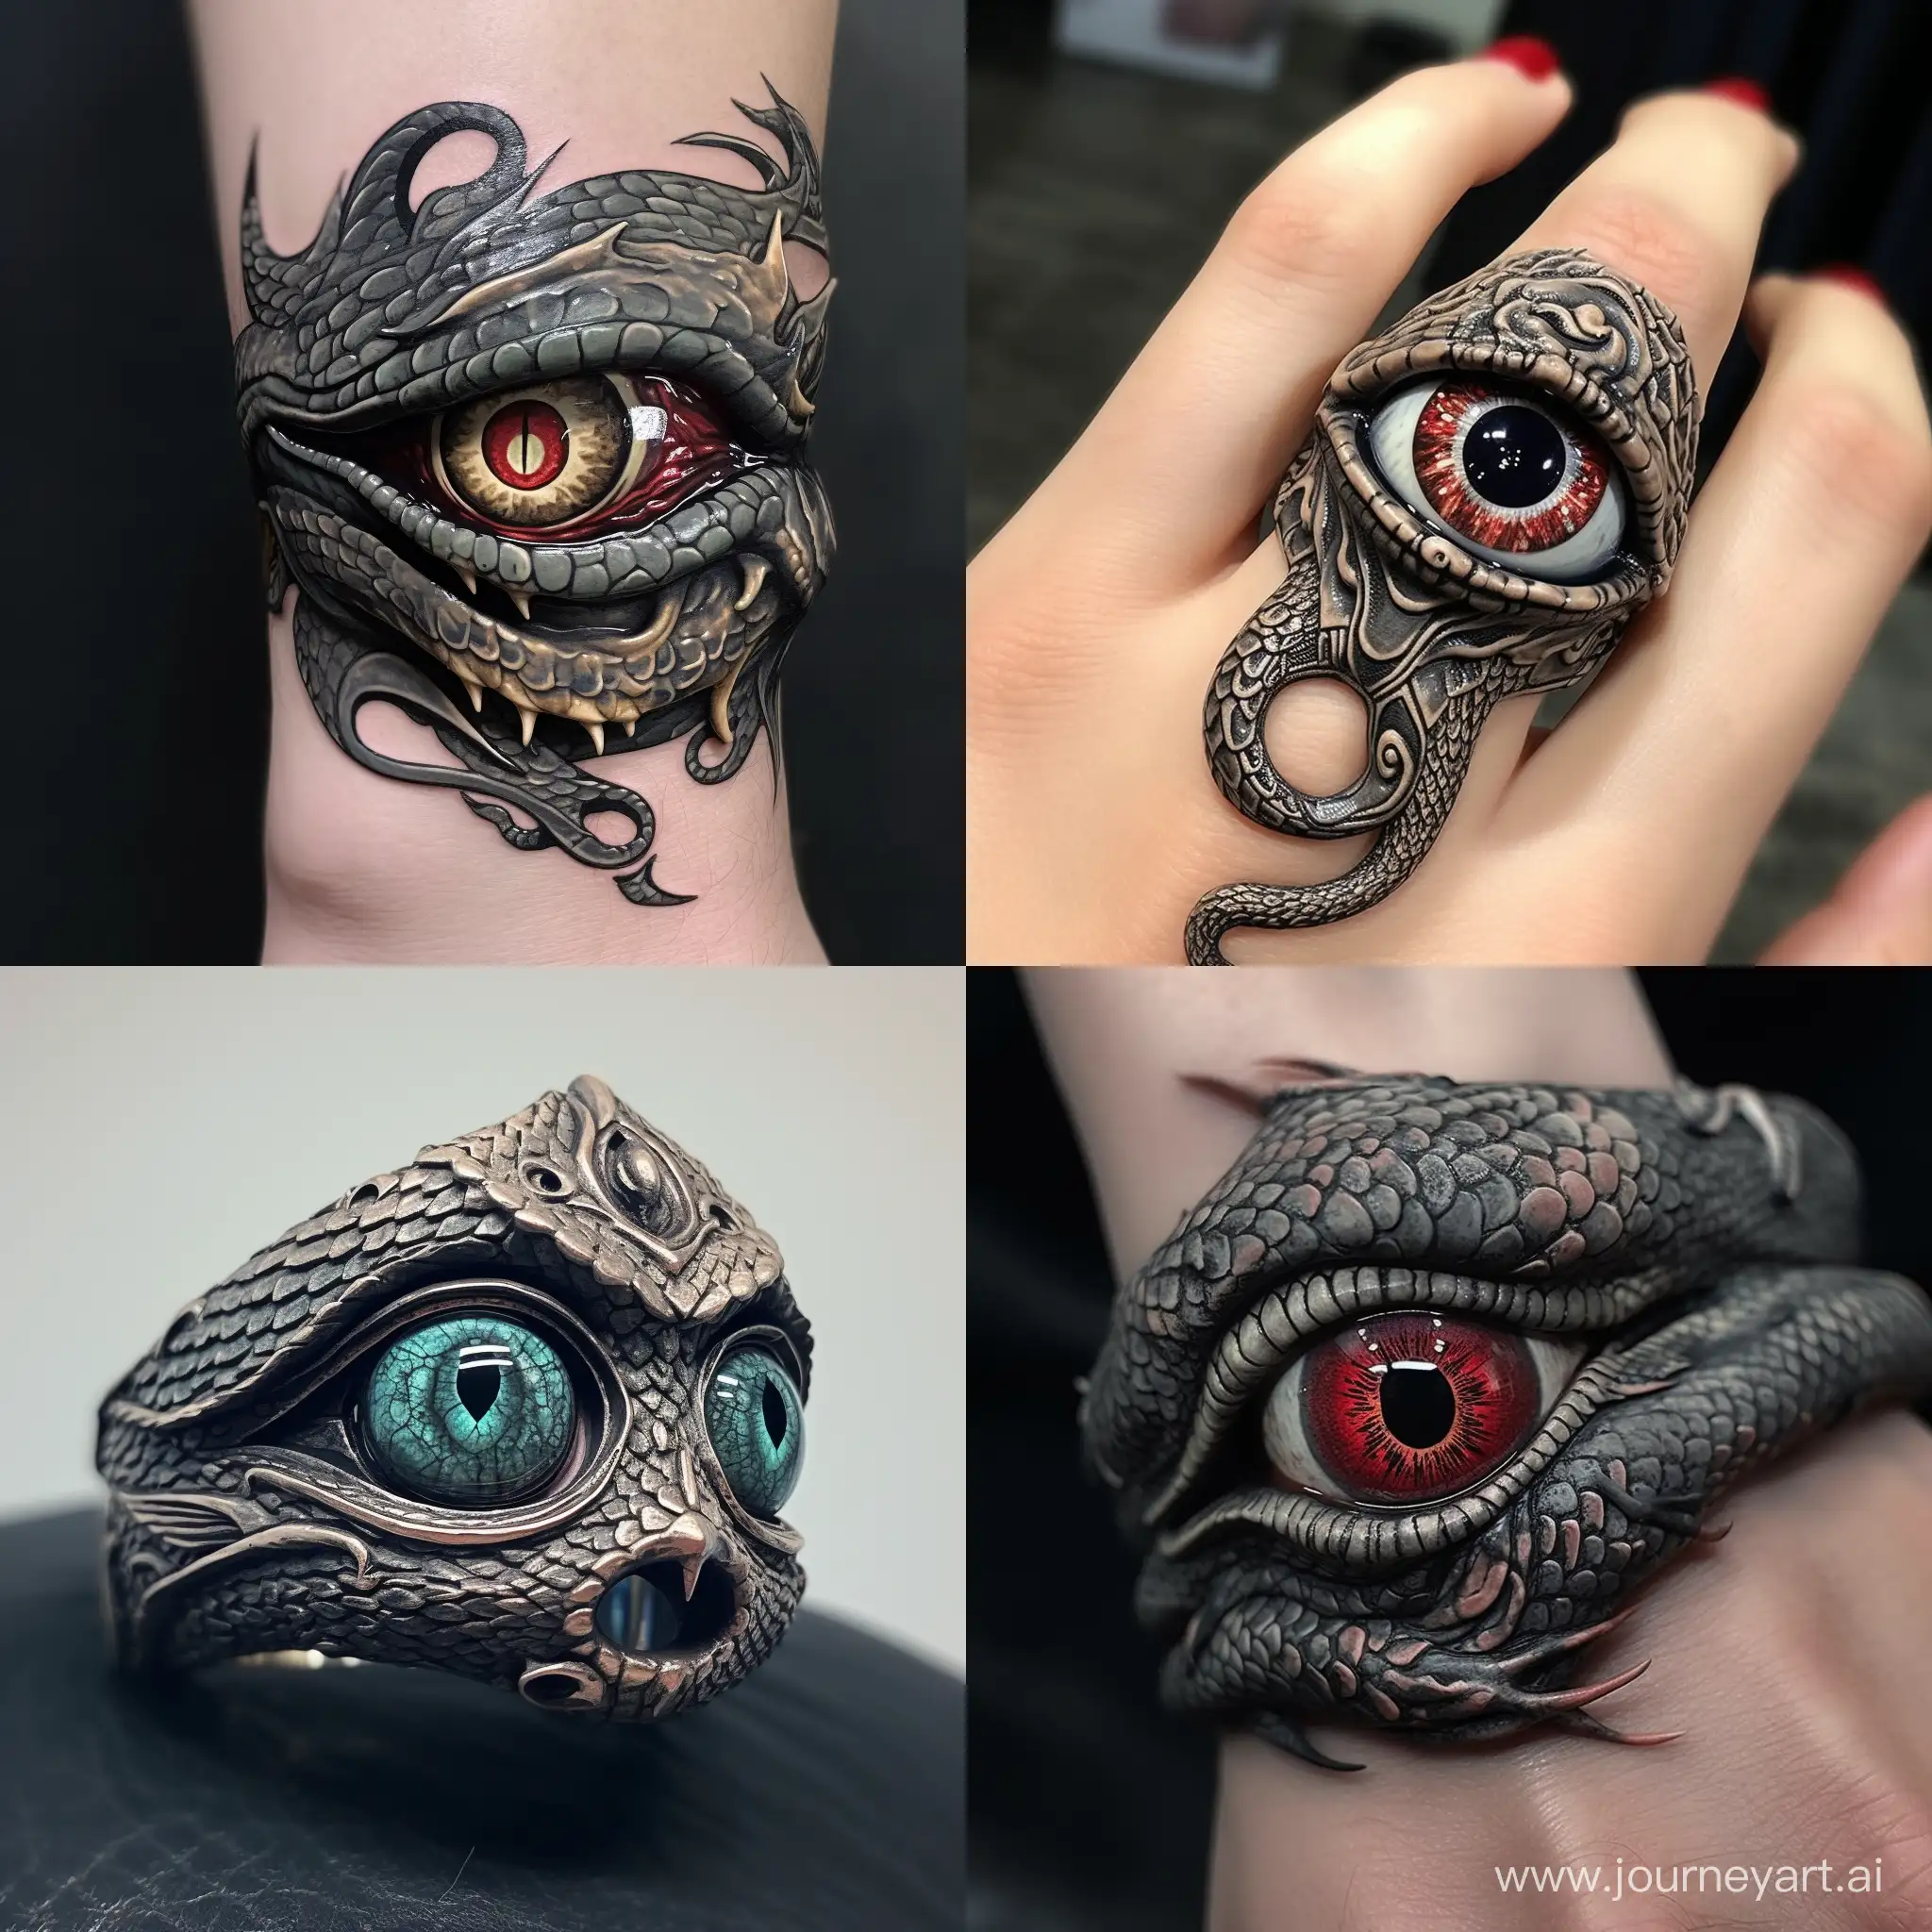 Graceful-Serpent-Tattoo-with-Enchanting-Eyes-and-Elegant-Shedding